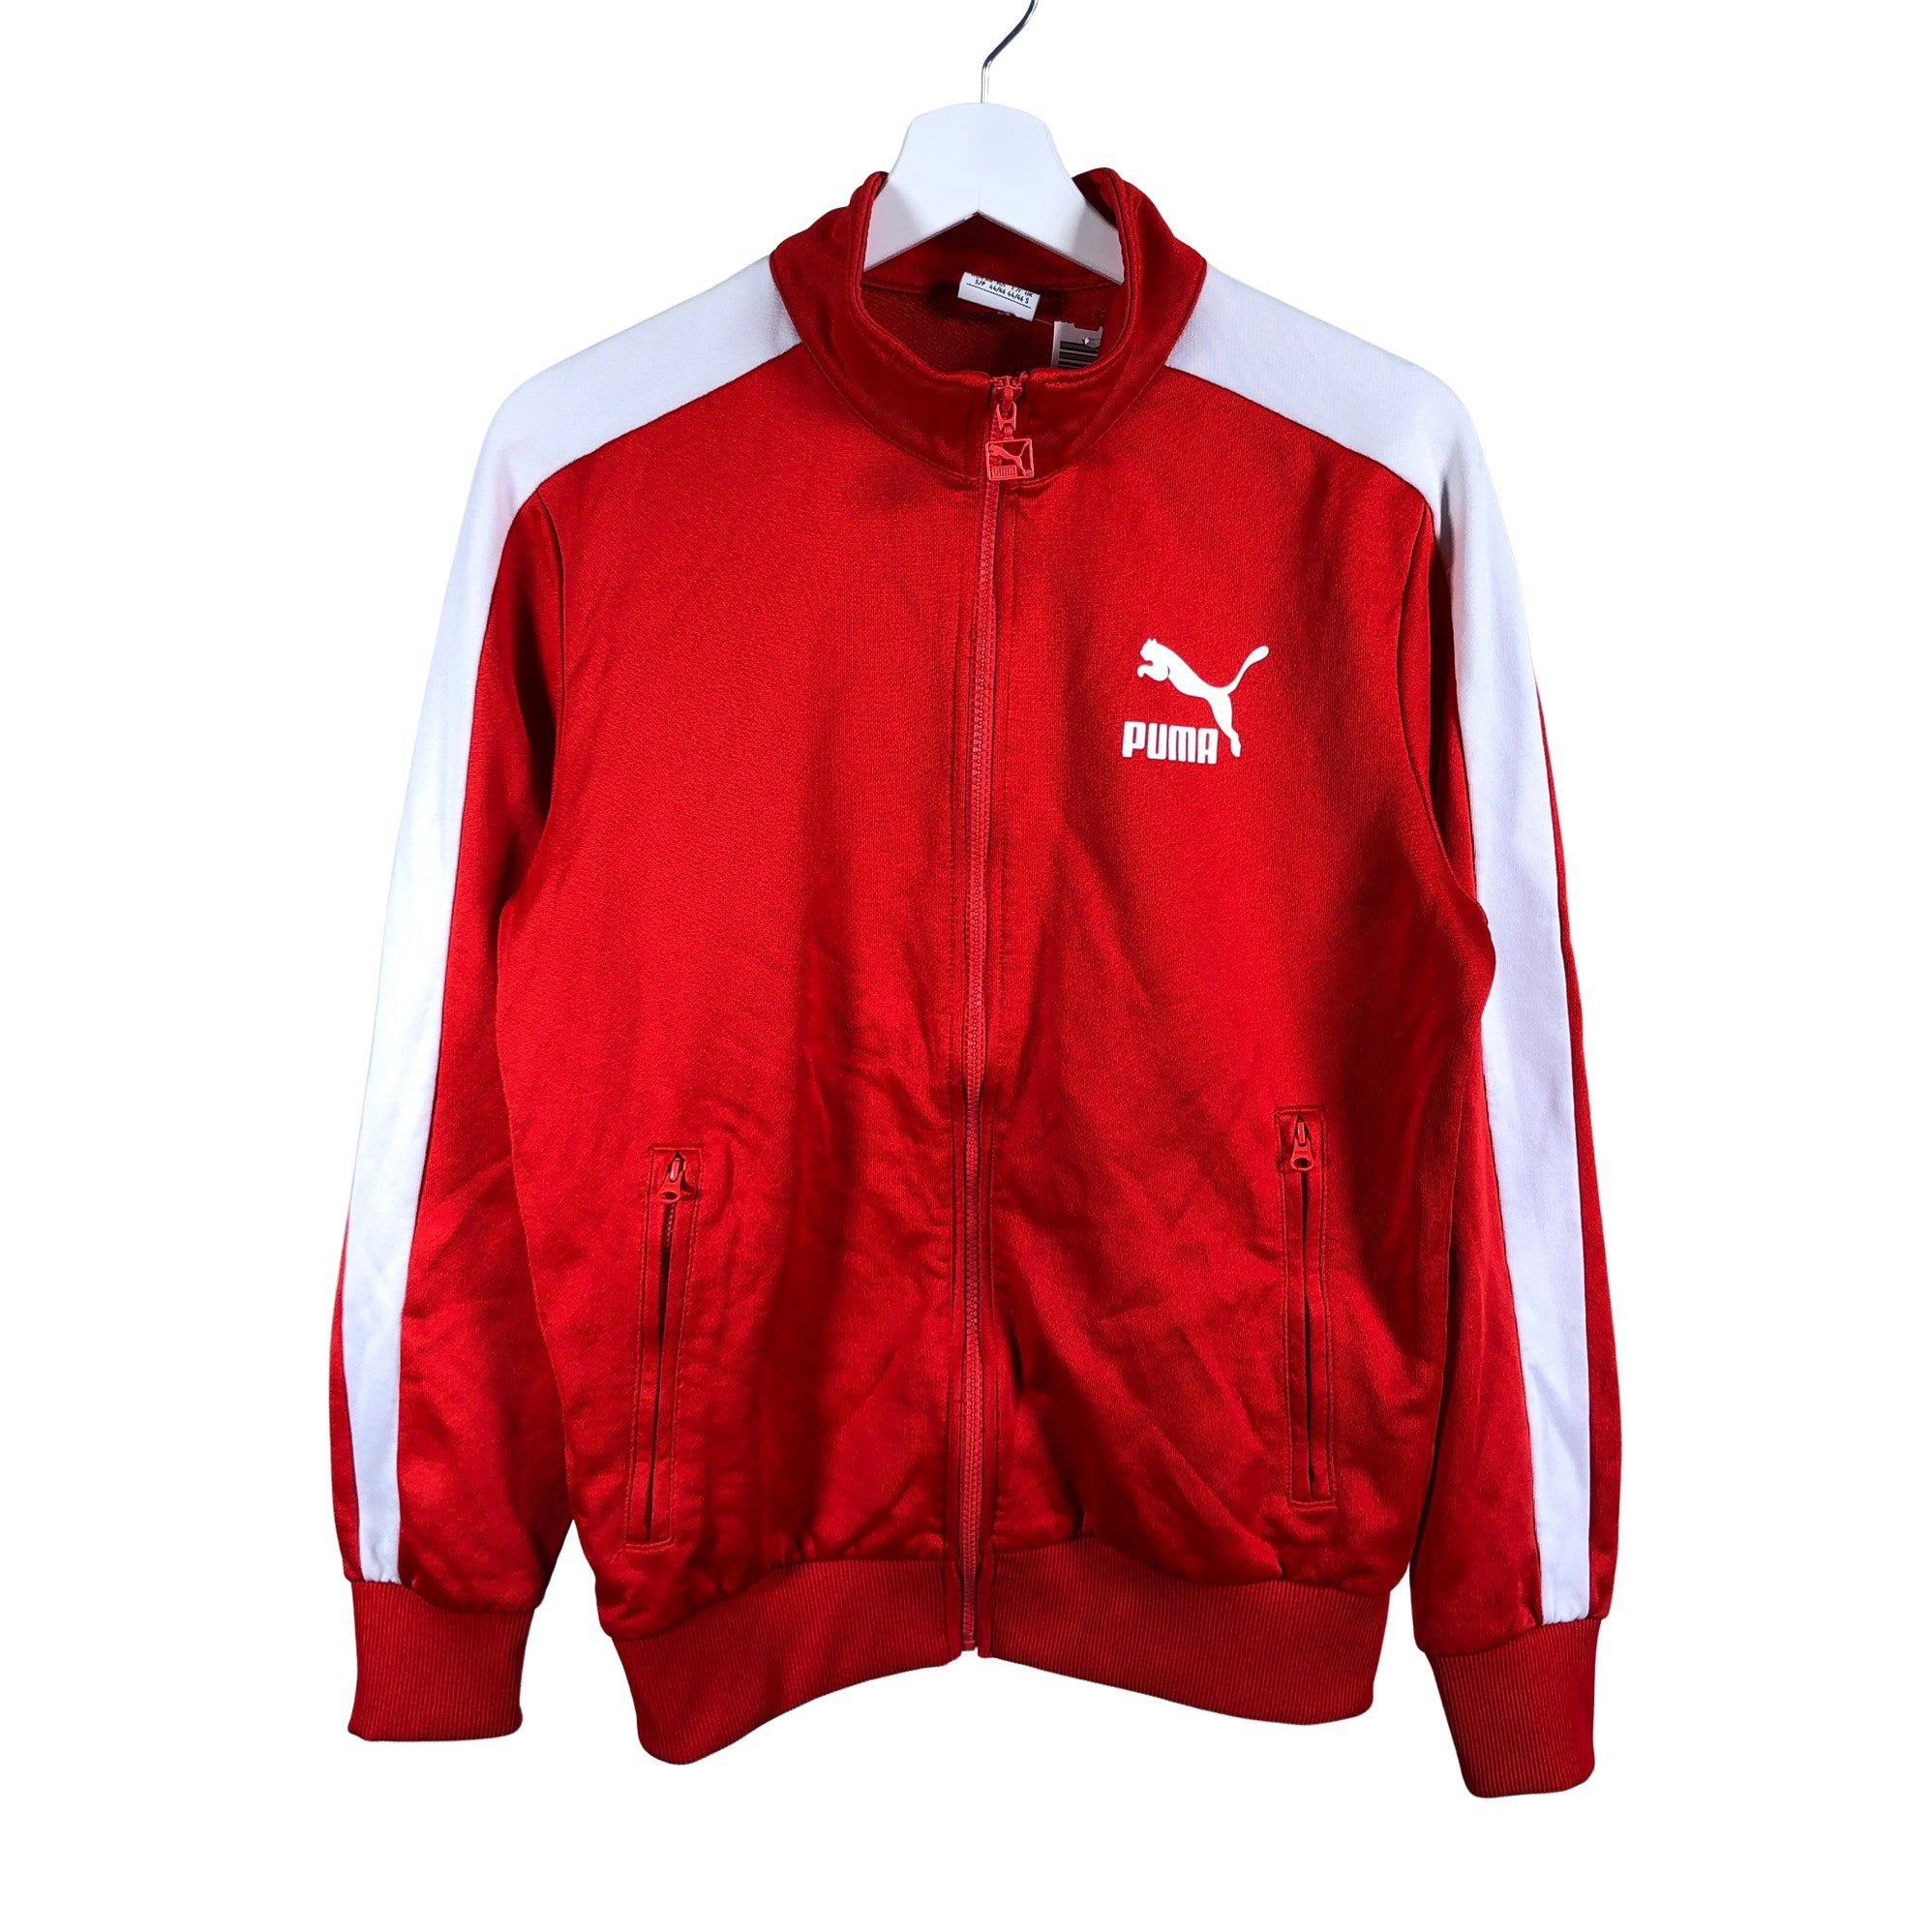 Men's Puma Track jacket, size S (Red) | Emmy